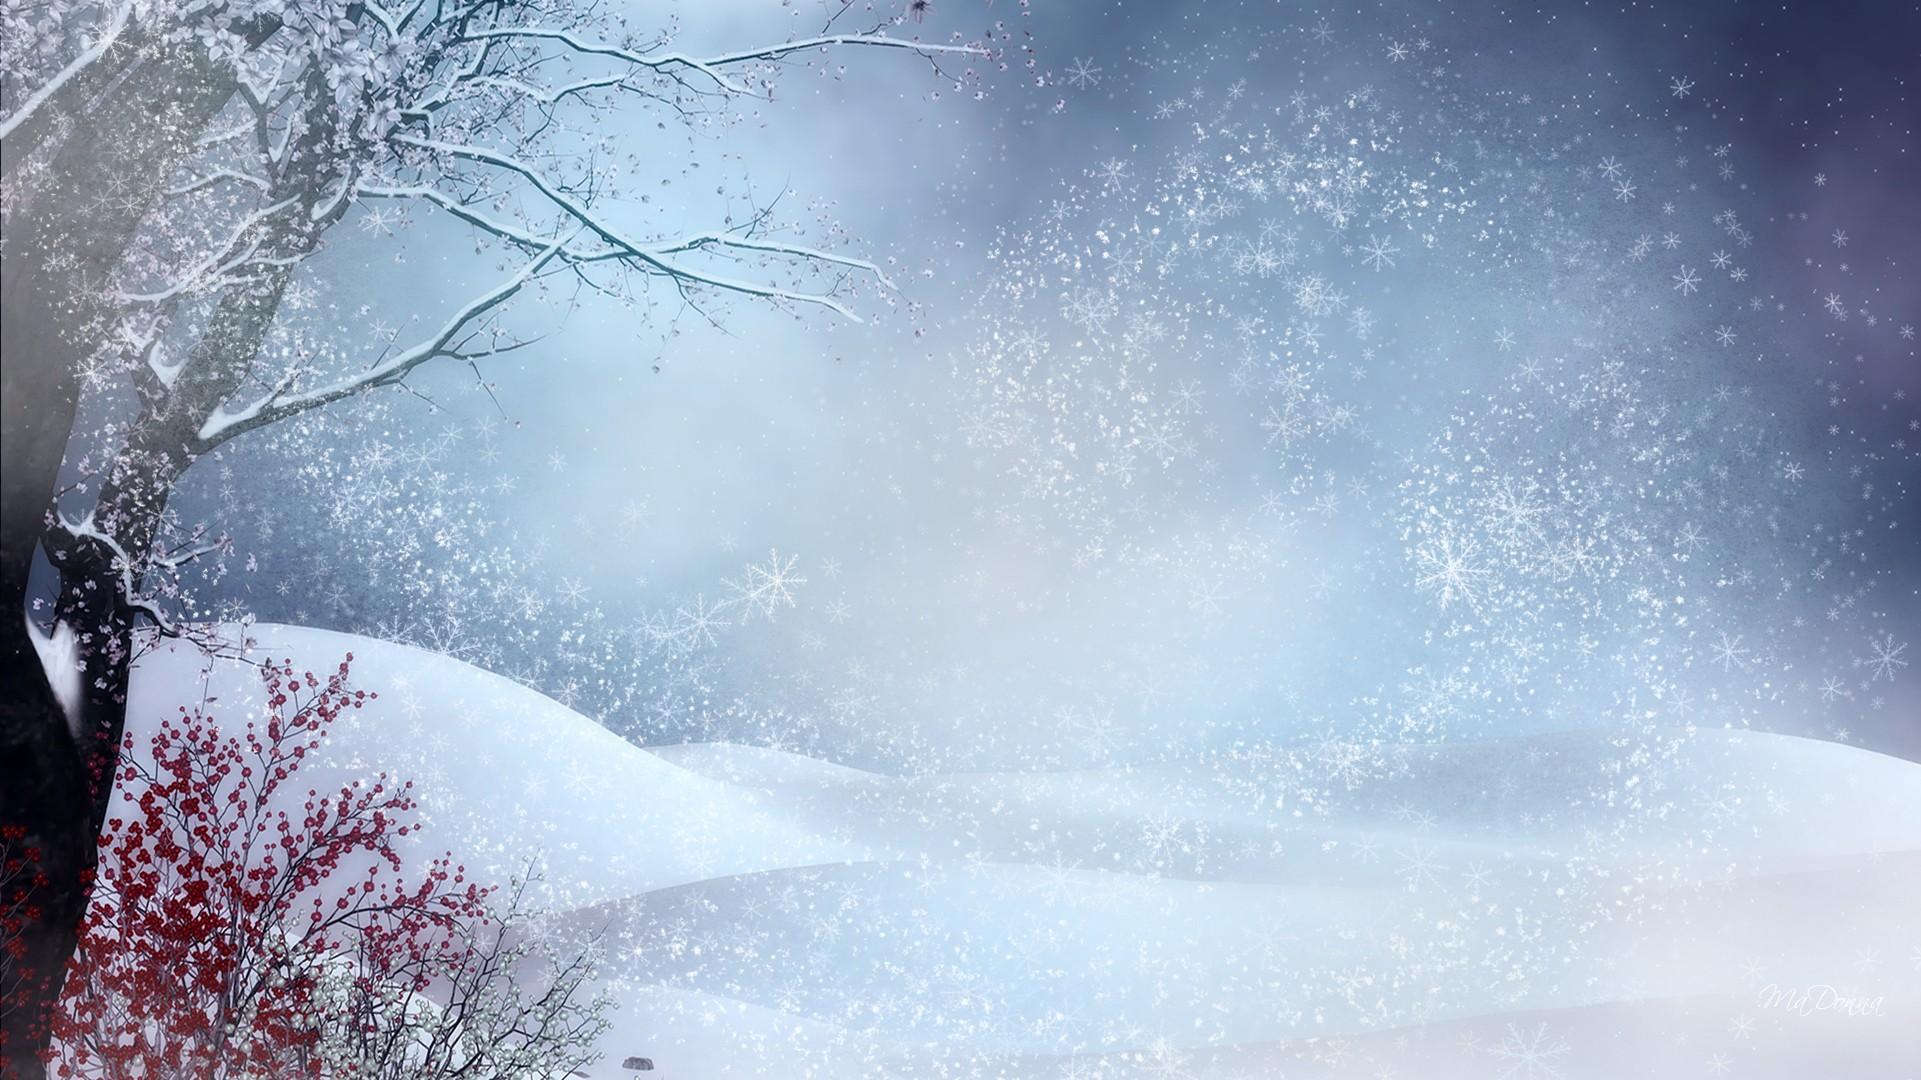 Early Winter Snow HD Wallpaper, get it now